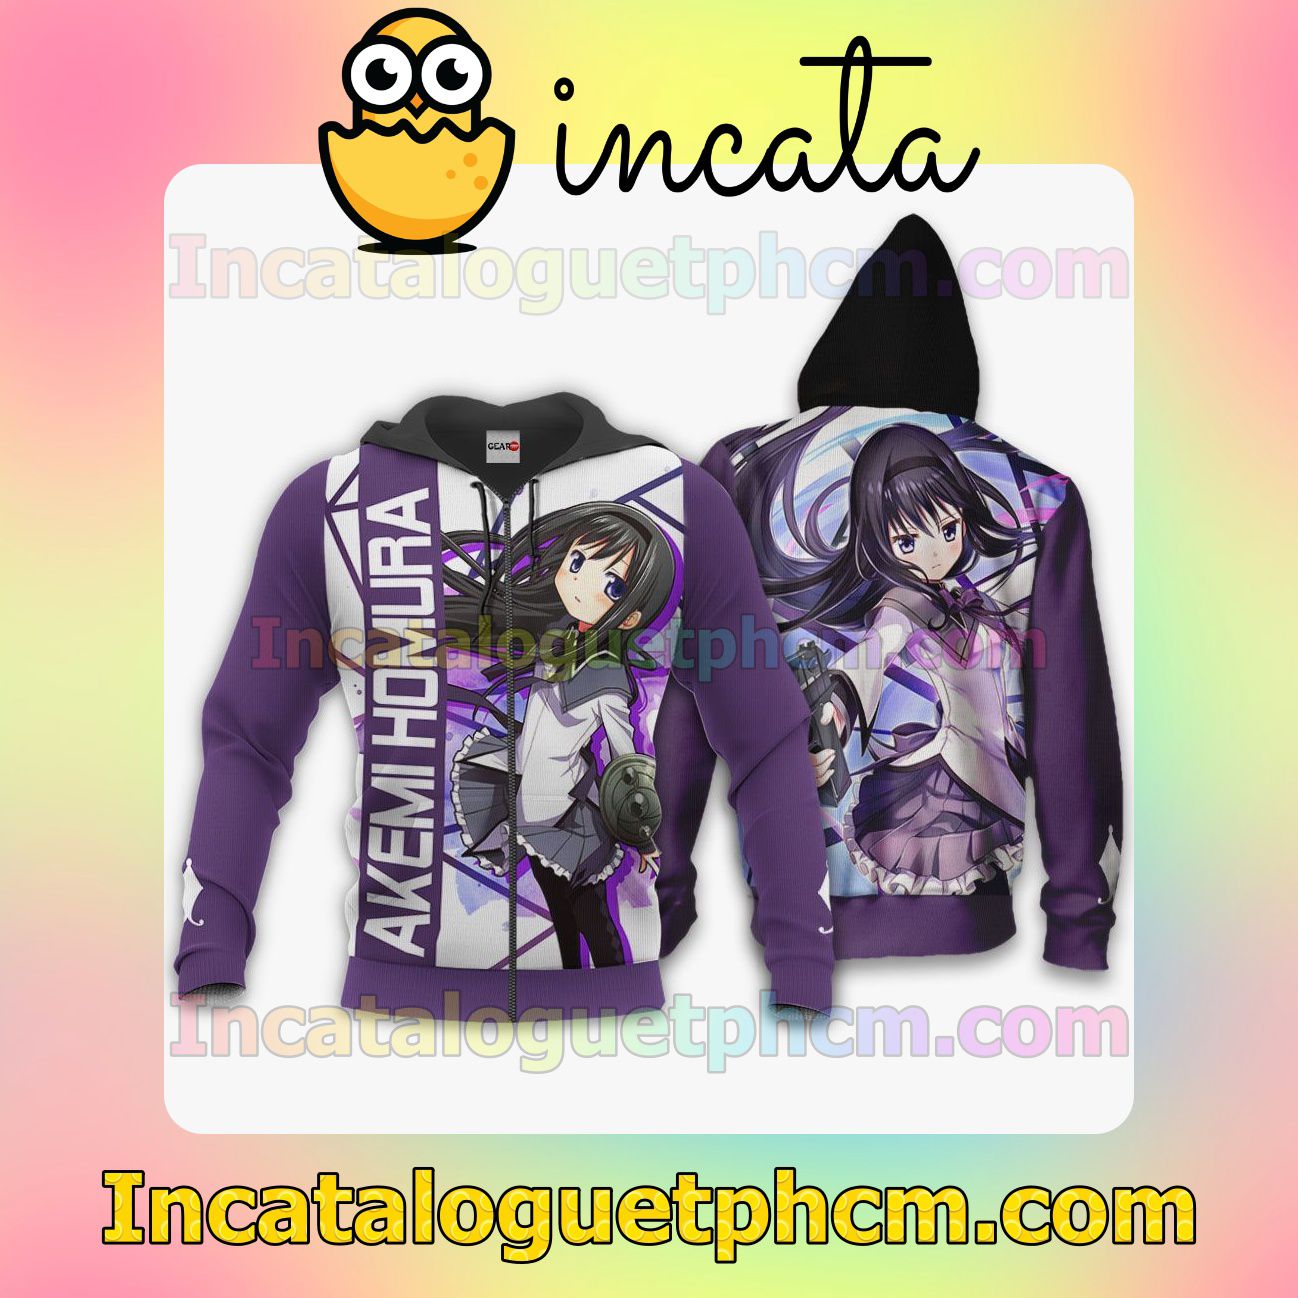 Puella Magi Madoka Magica Akemi Homura Anime Clothing Merch Zip Hoodie Jacket Shirts